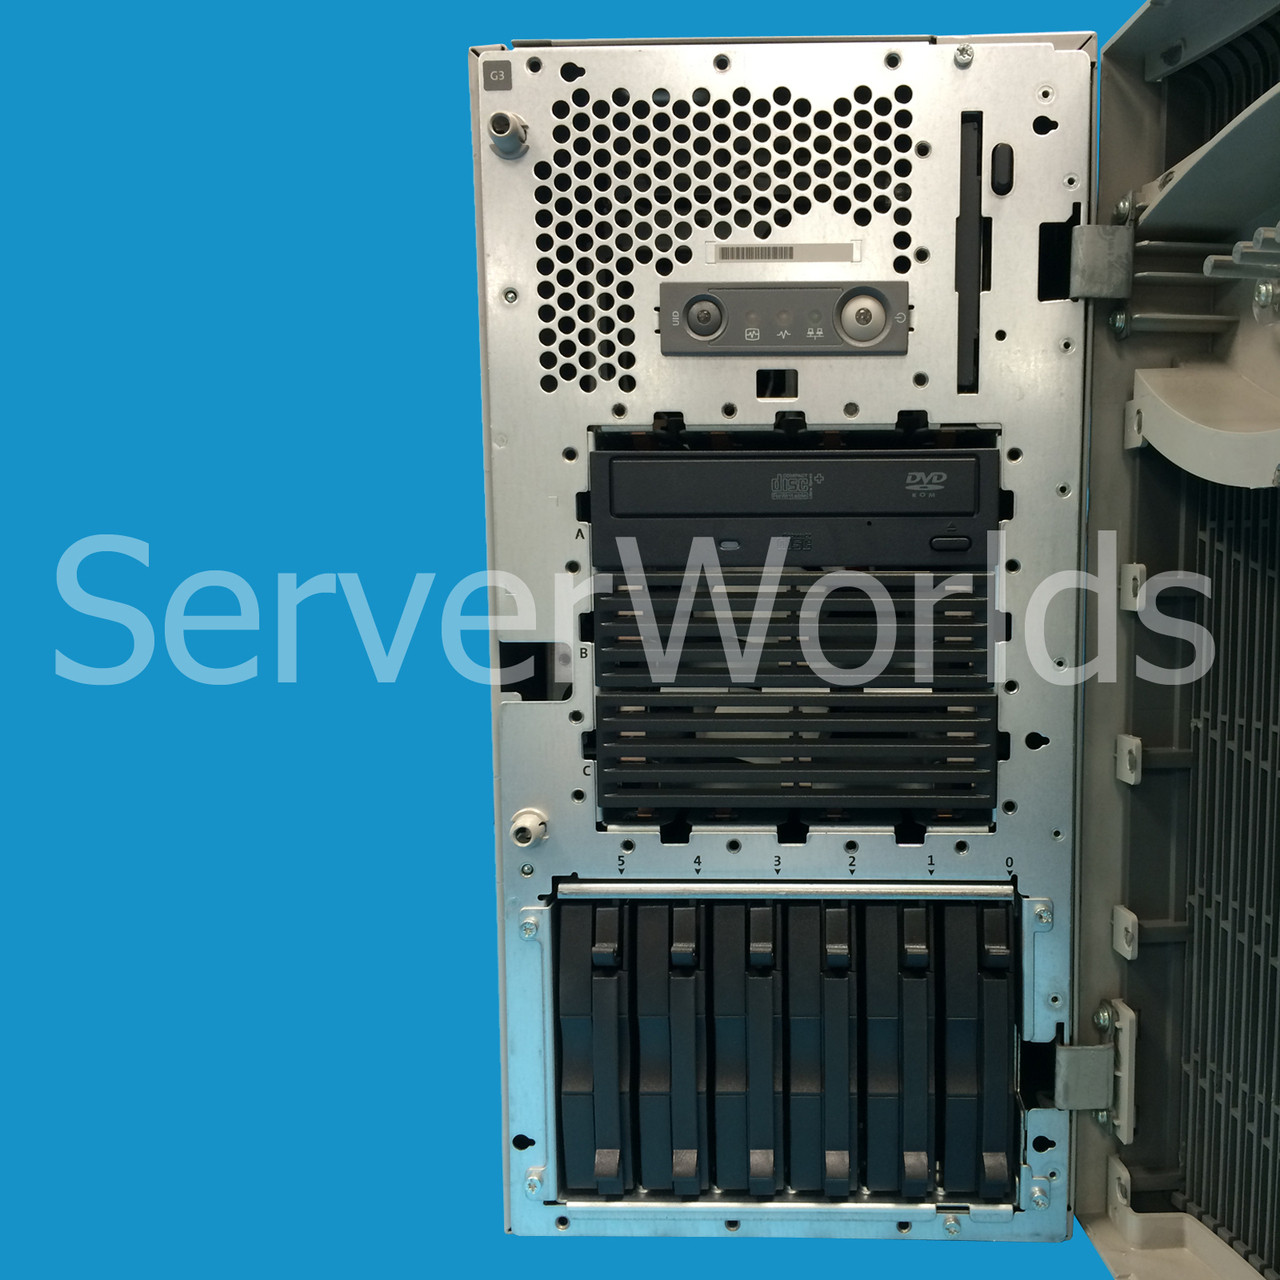 Refurbished HP ML370 G3 Tower Xeon 2.8Ghz, 512MB RAM 305461-001